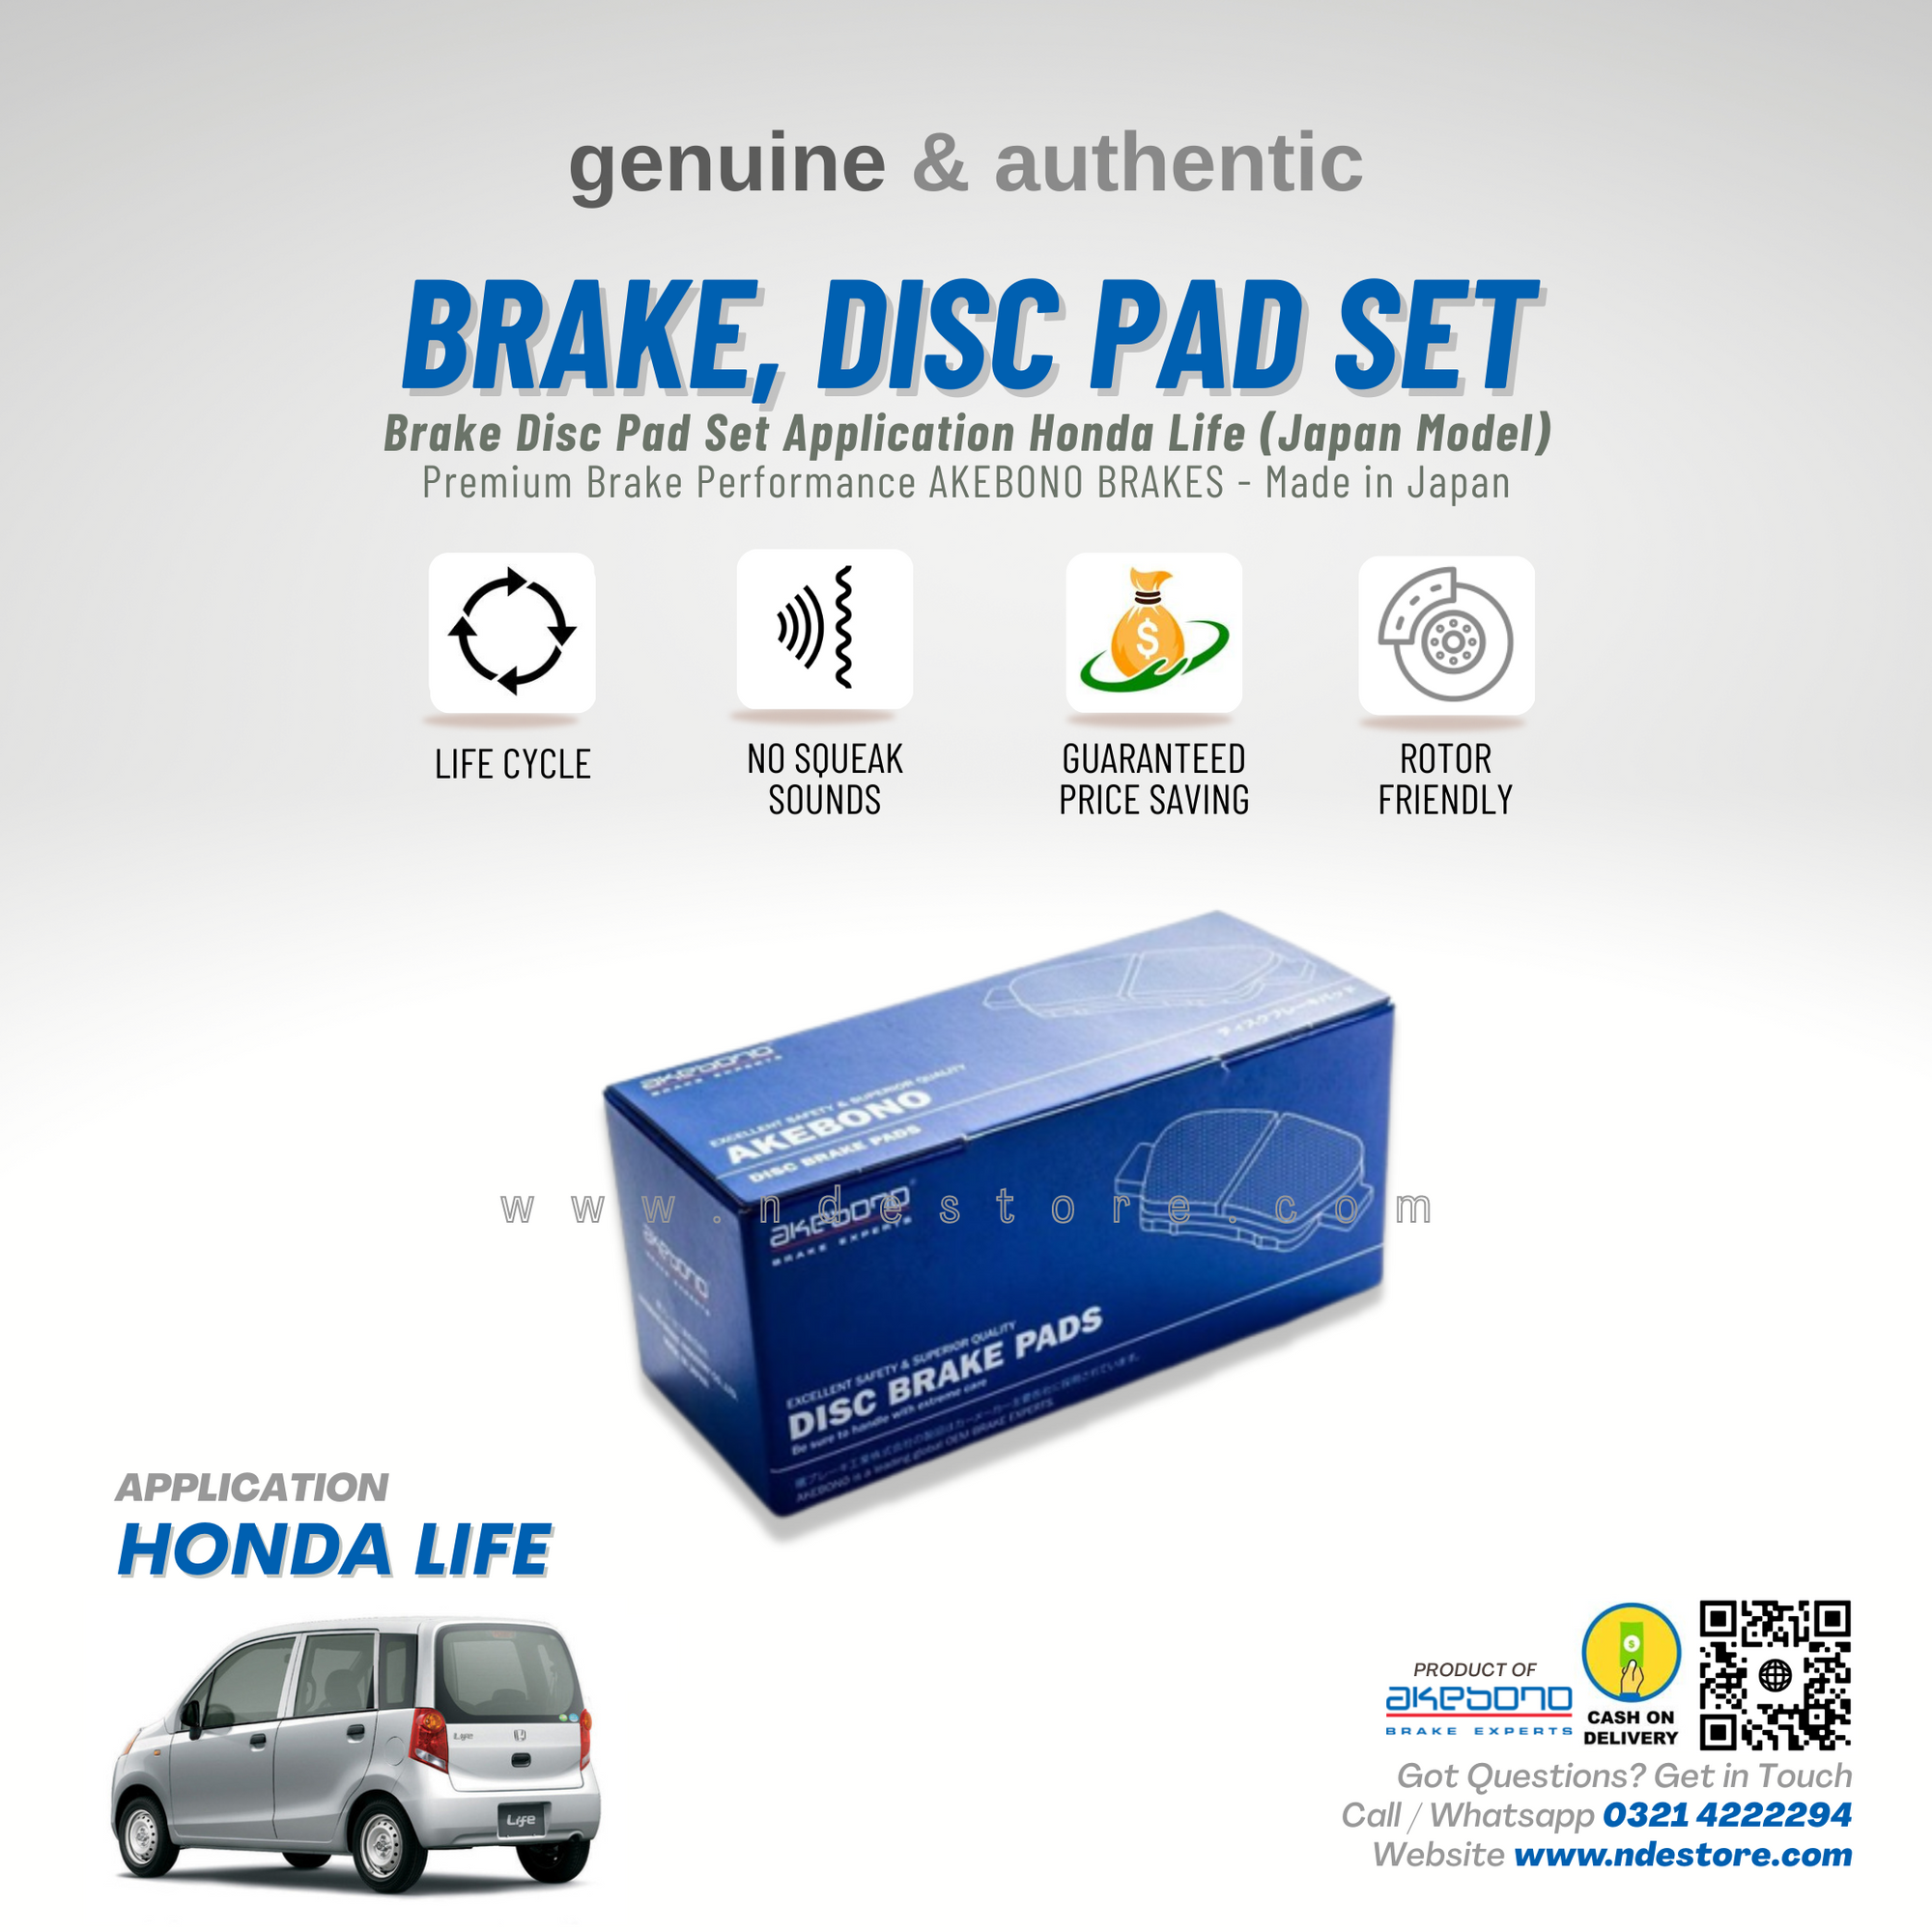 BRAKE, DISC PAD FRONT FOR HONDA LIFE - AKEBONO